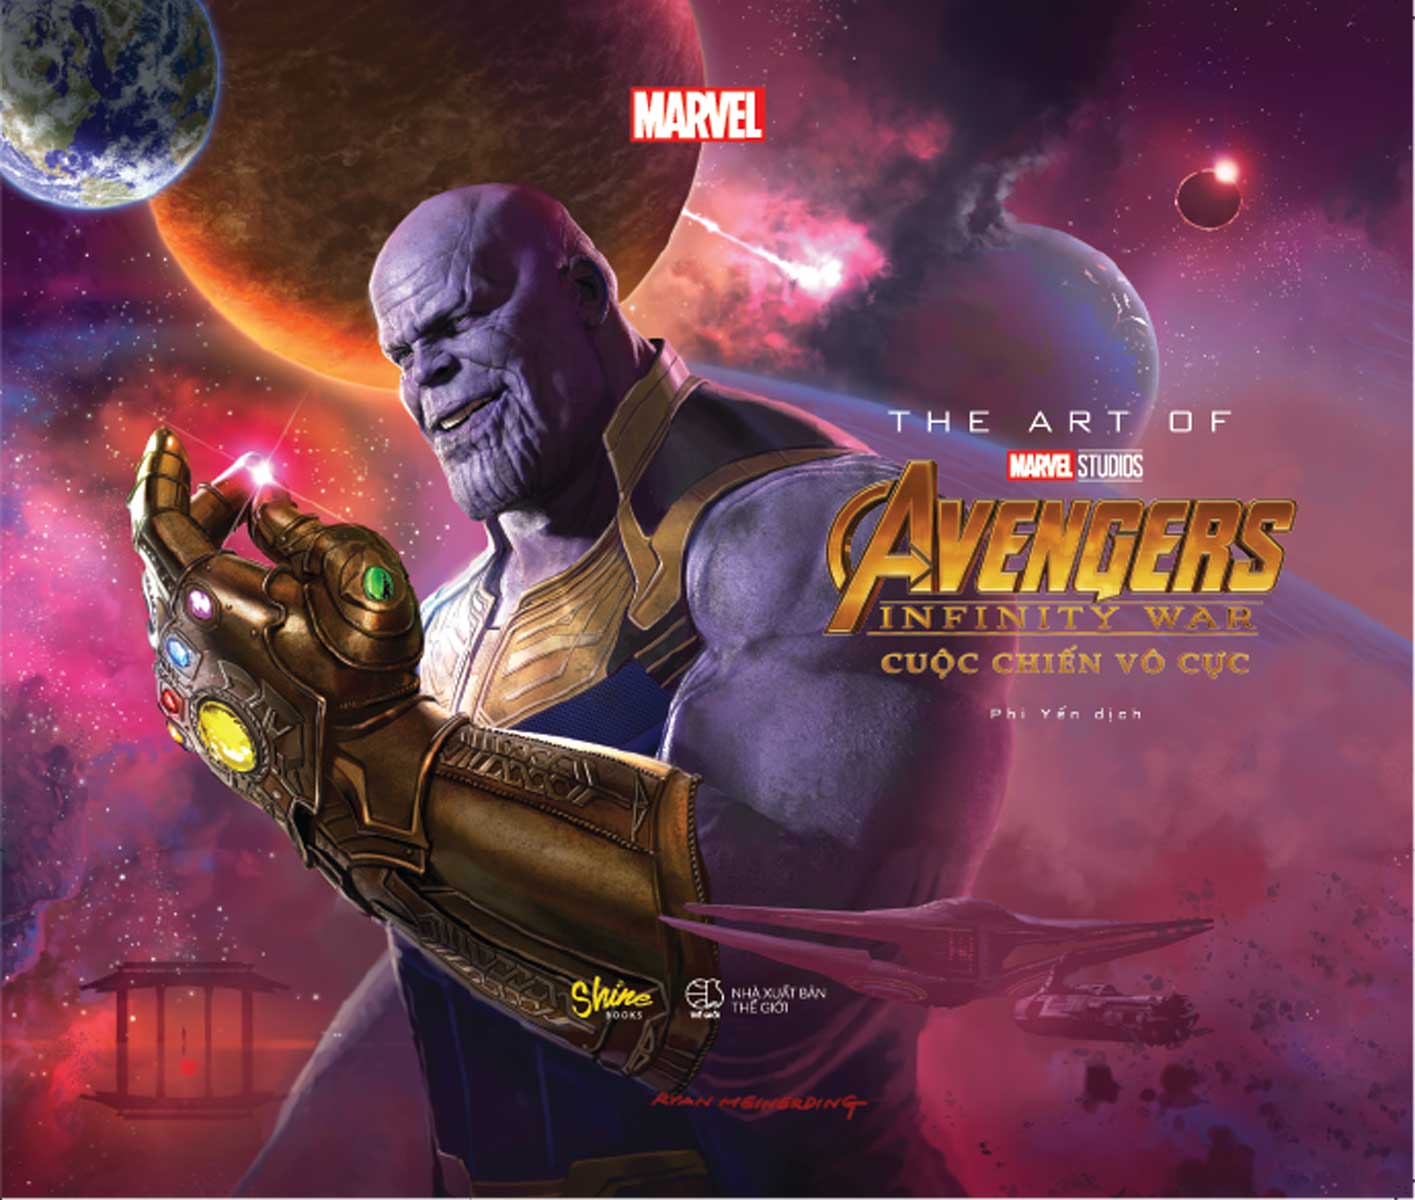 The Art Of Marvel Studios Avengers Infinity War - Cuộc Chiến Vô Cực